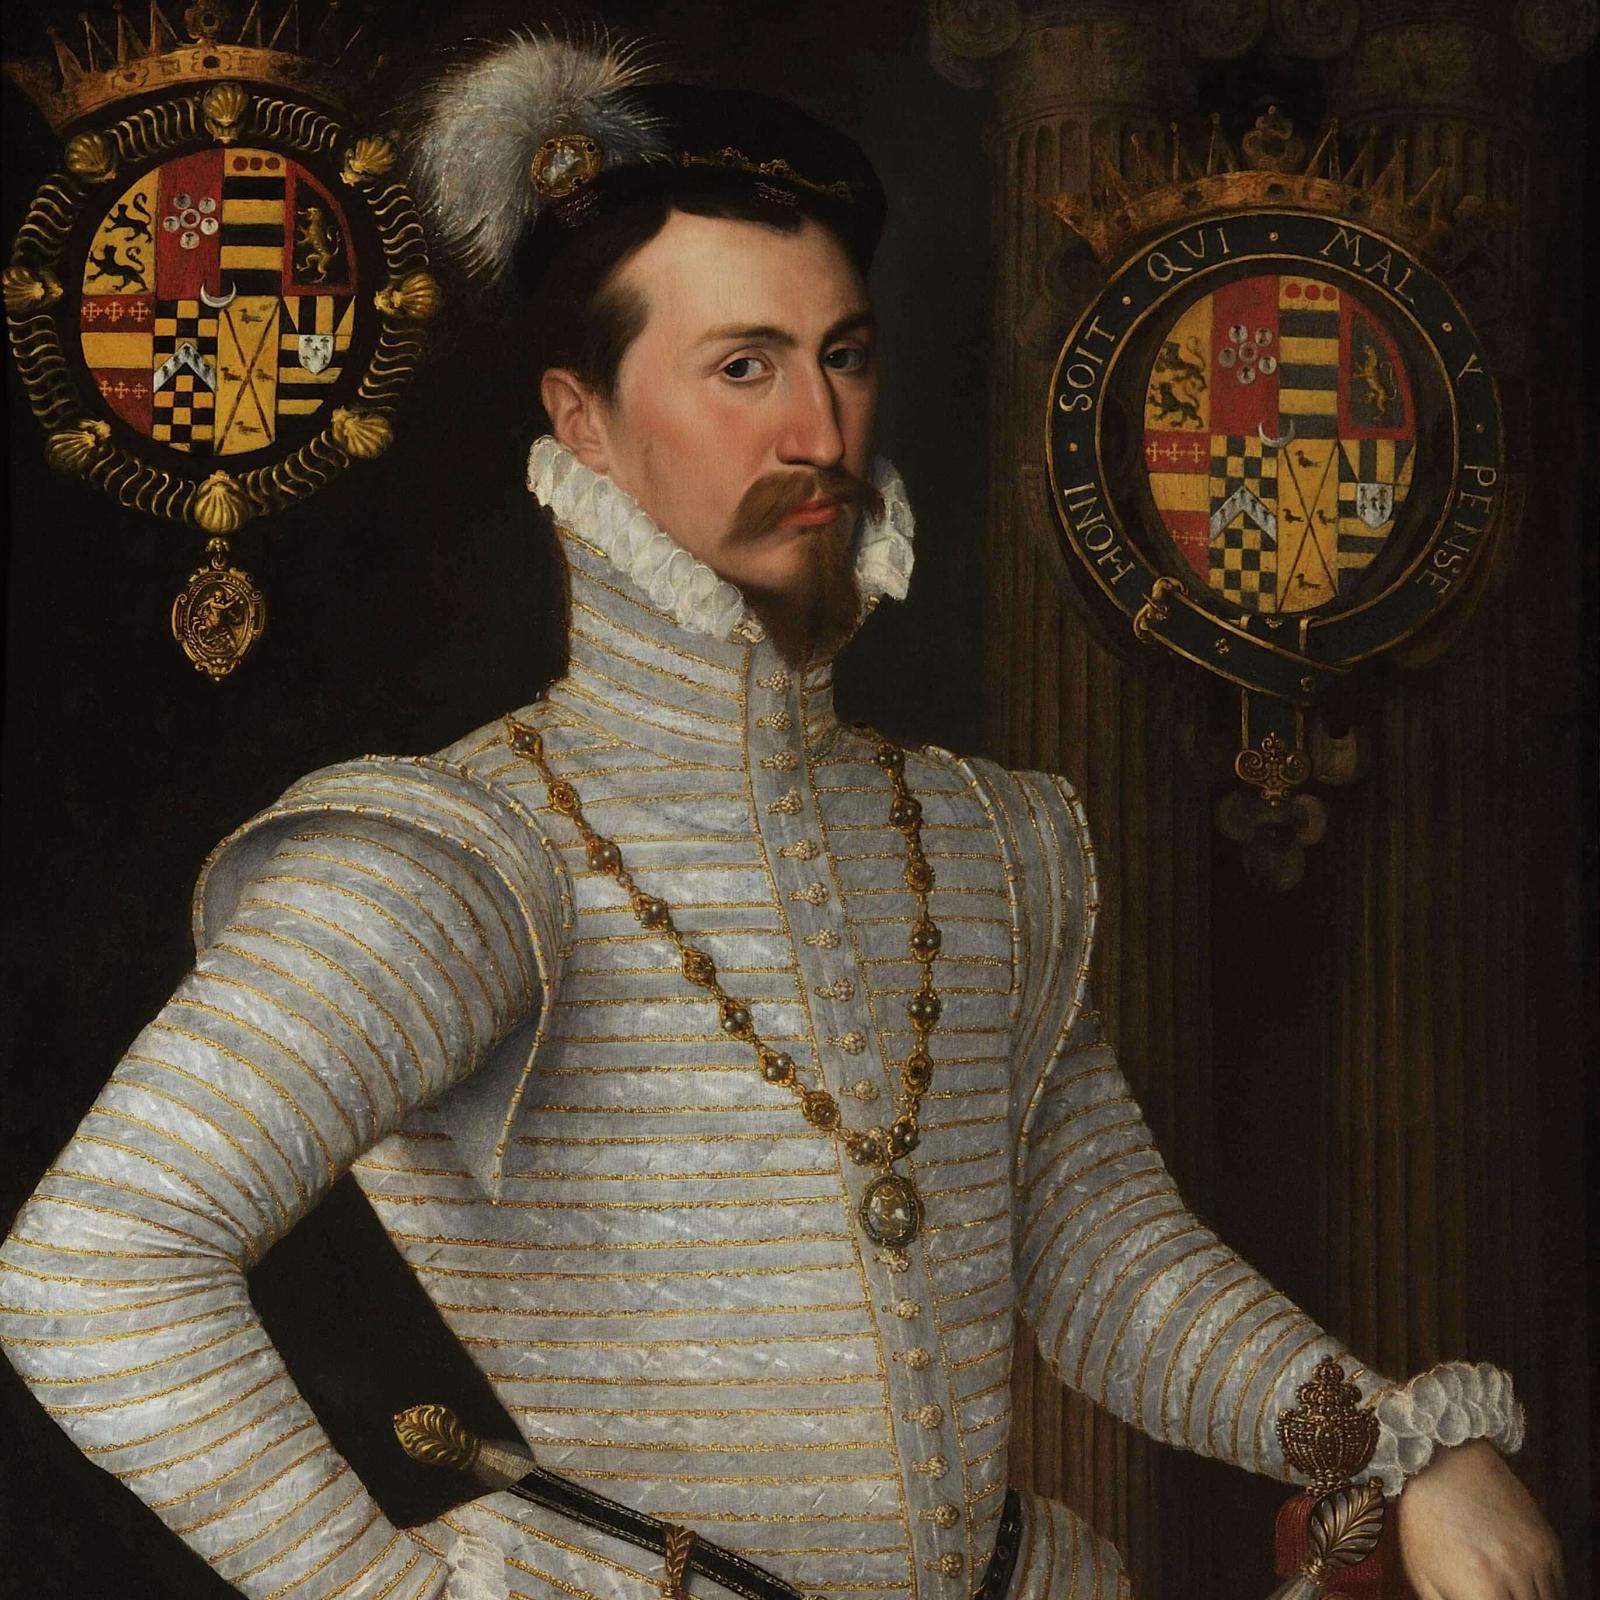 Роберт Дадли — фаворит Елизаветы II и командующий английским корпусом в Нидерландах.